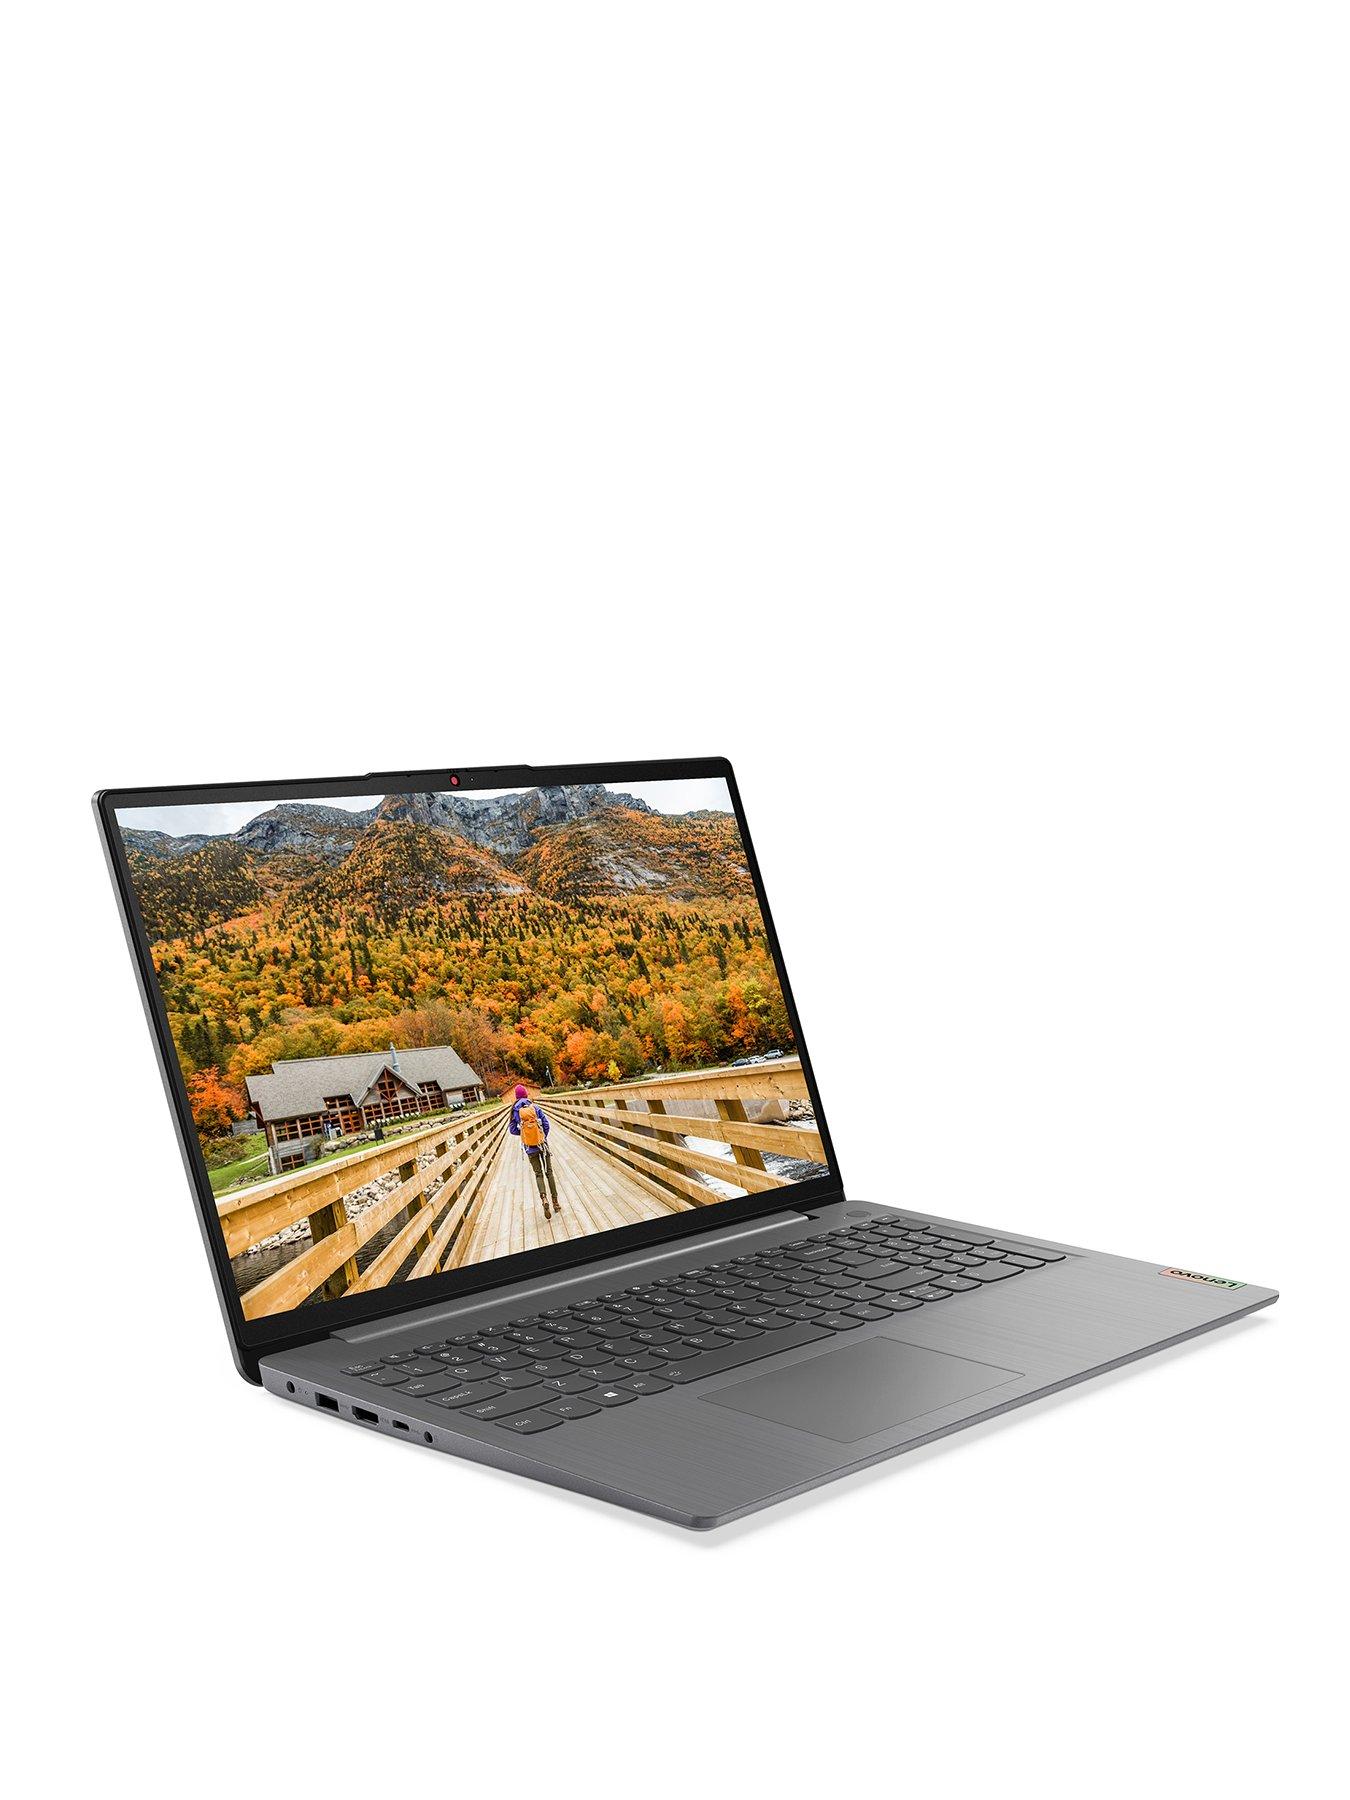 IdeaPad 3 (17) AMD Laptop, Powerful Everyday PC